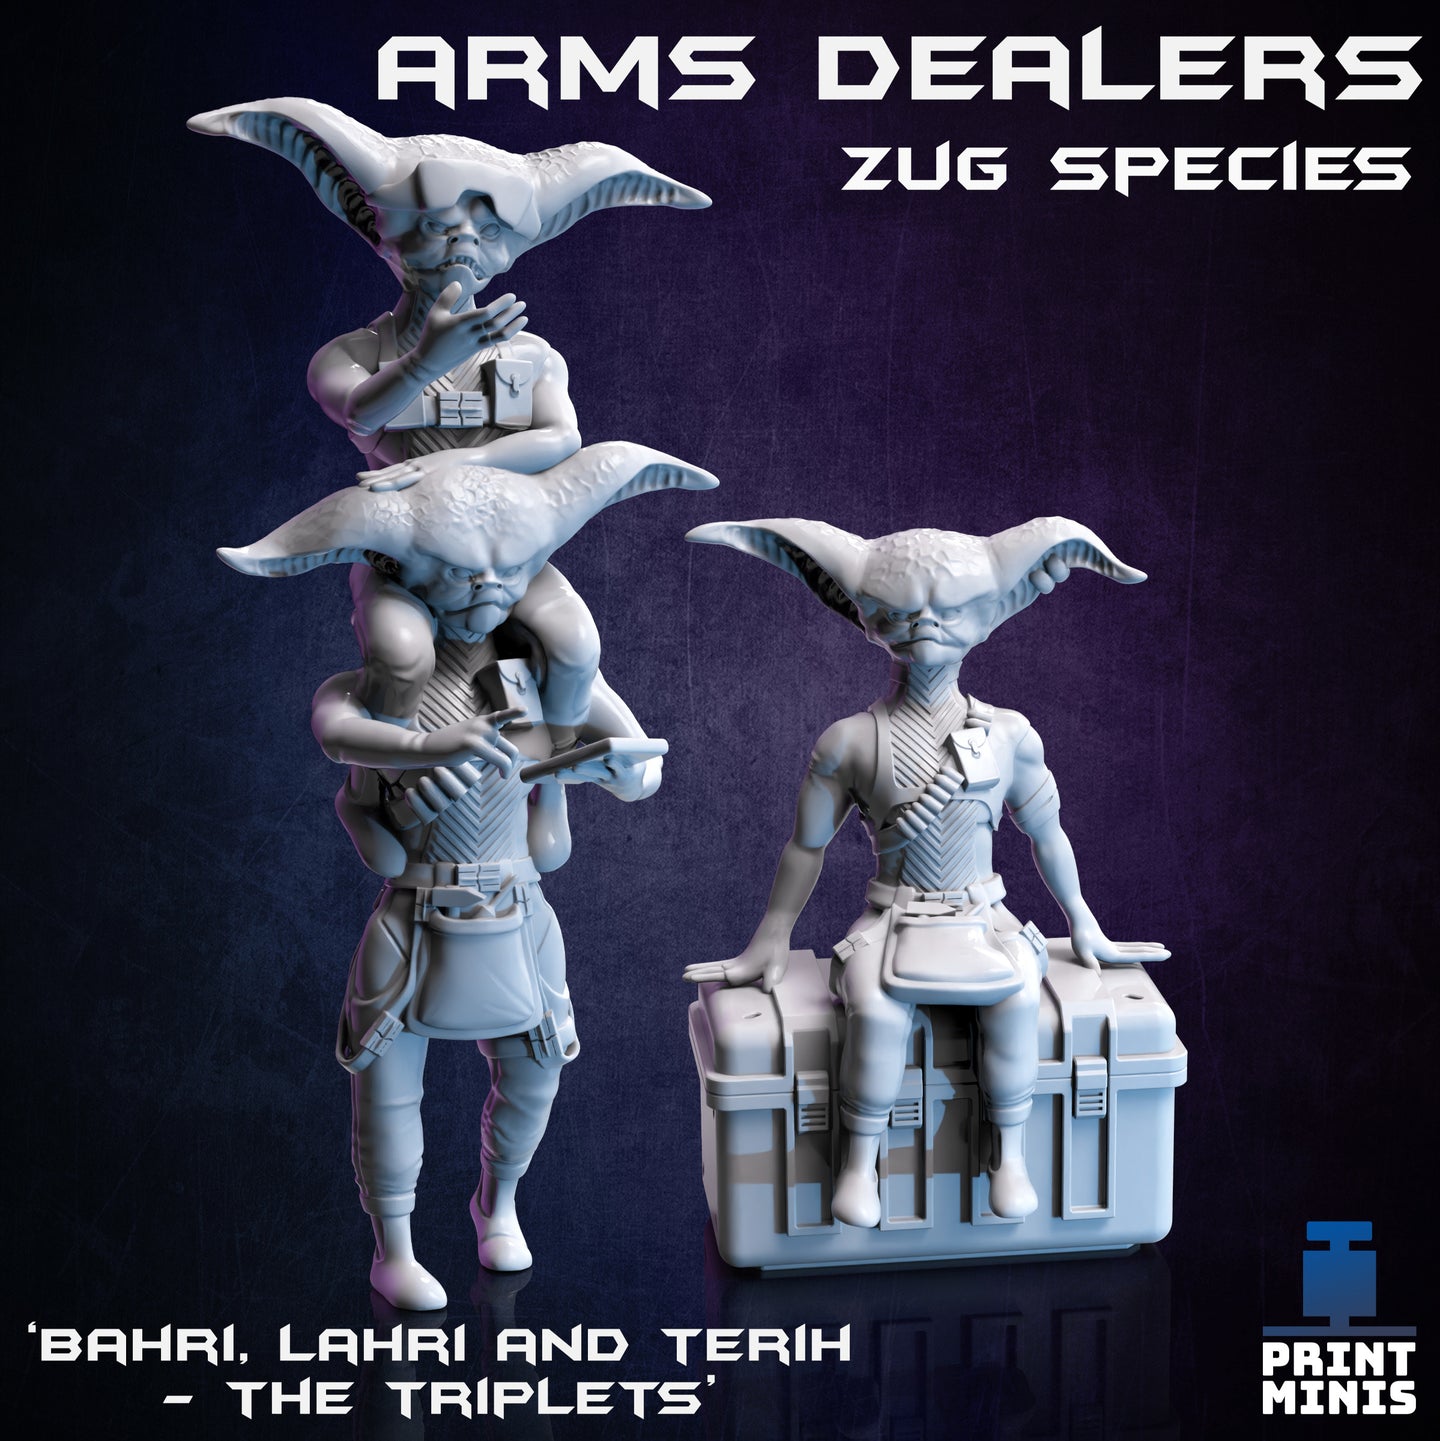 Alien Arms Dealers - The Zug Triplets - Night Market - Print Minis - Wargaming D&D DnD